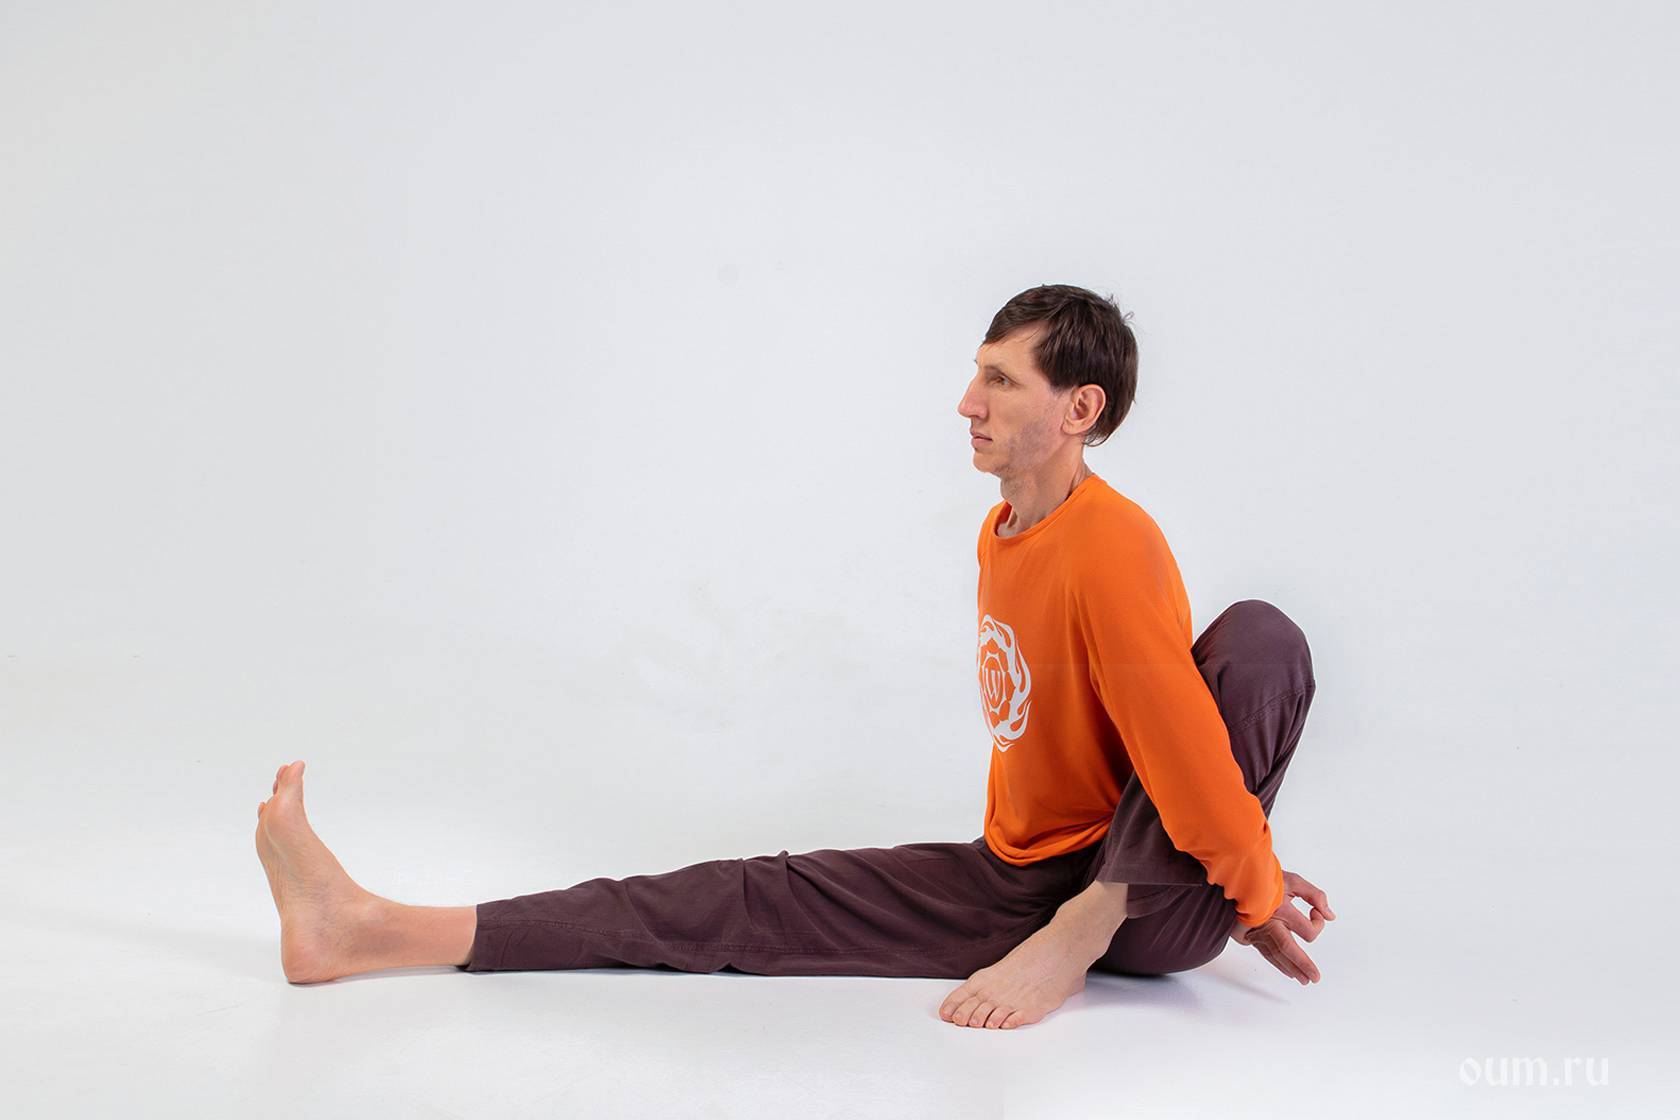 Маричиасана 1 и 2 или поза мудреца маричи в йоге: техника выполнения, польза, противопоказания